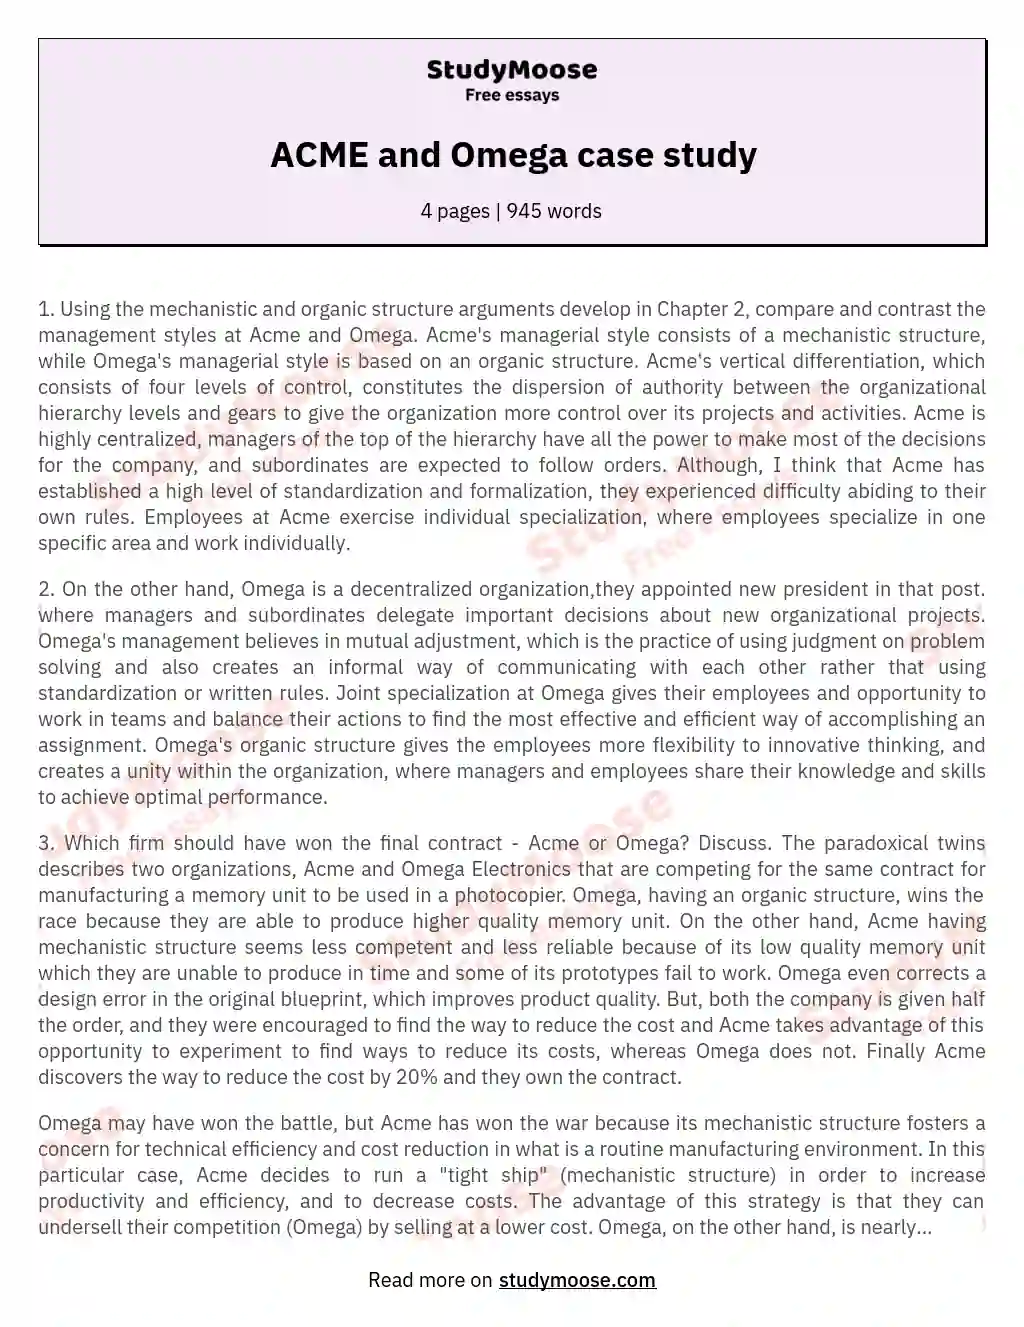 ACME and Omega case study essay